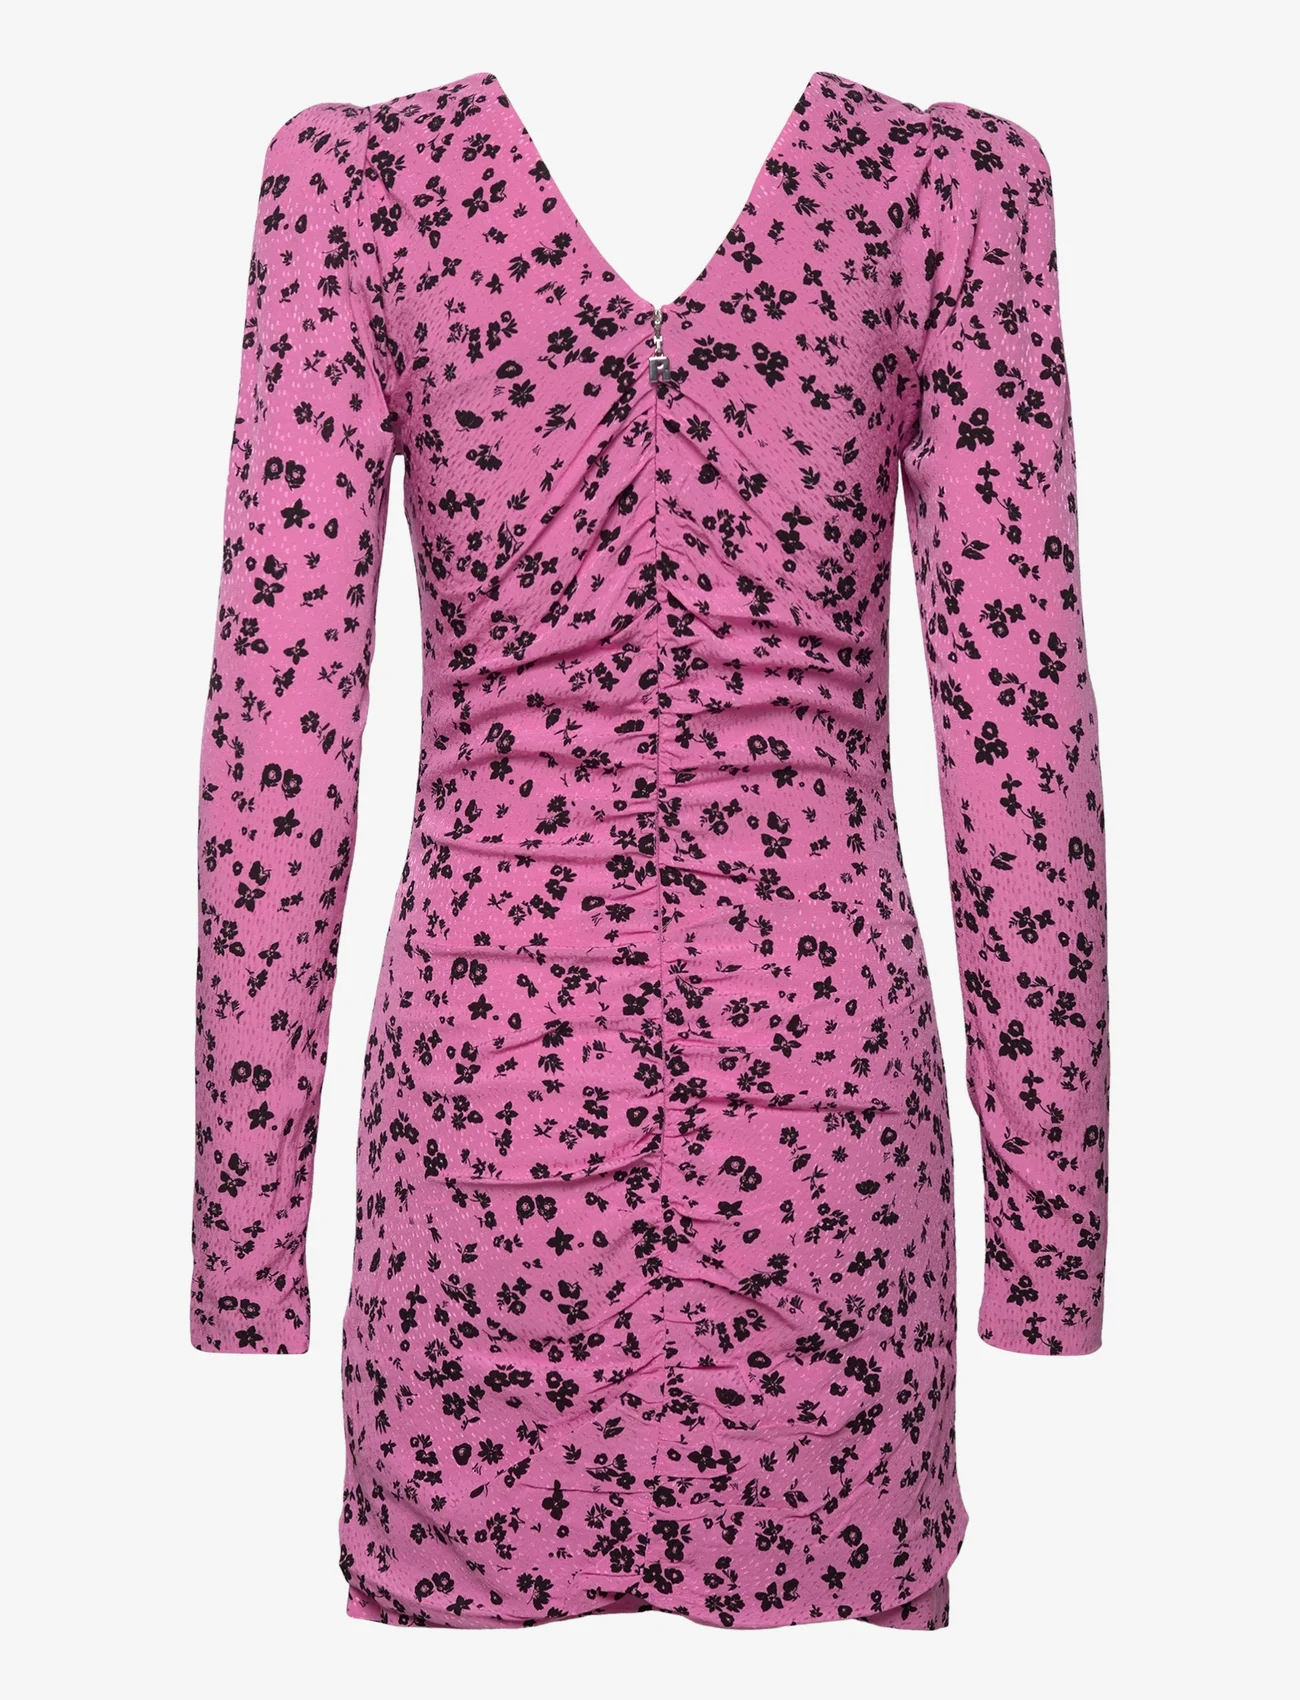 ROTATE Birger Christensen - Fine Jacquard Button Dress - odzież imprezowa w cenach outletowych - super pink comb. - 1